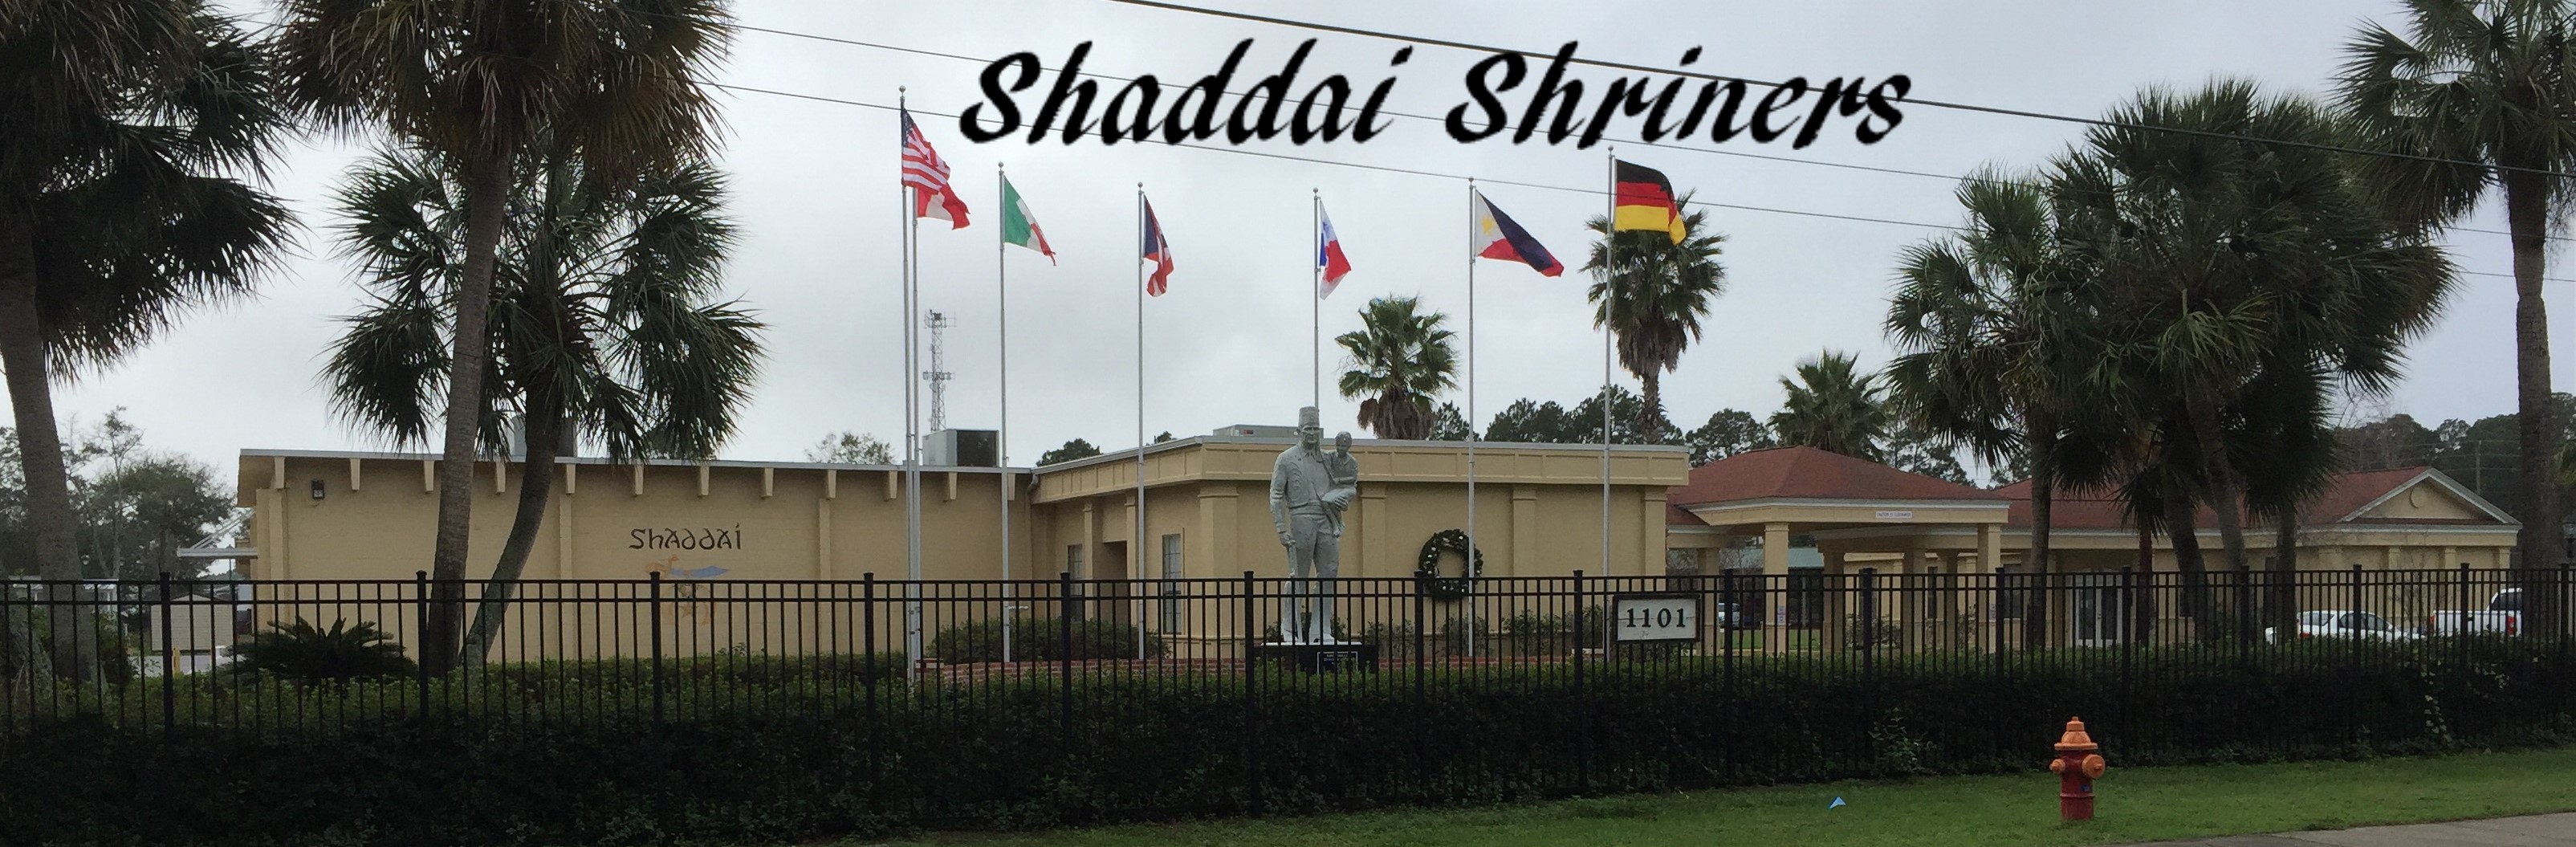 Shaddai Shrine building